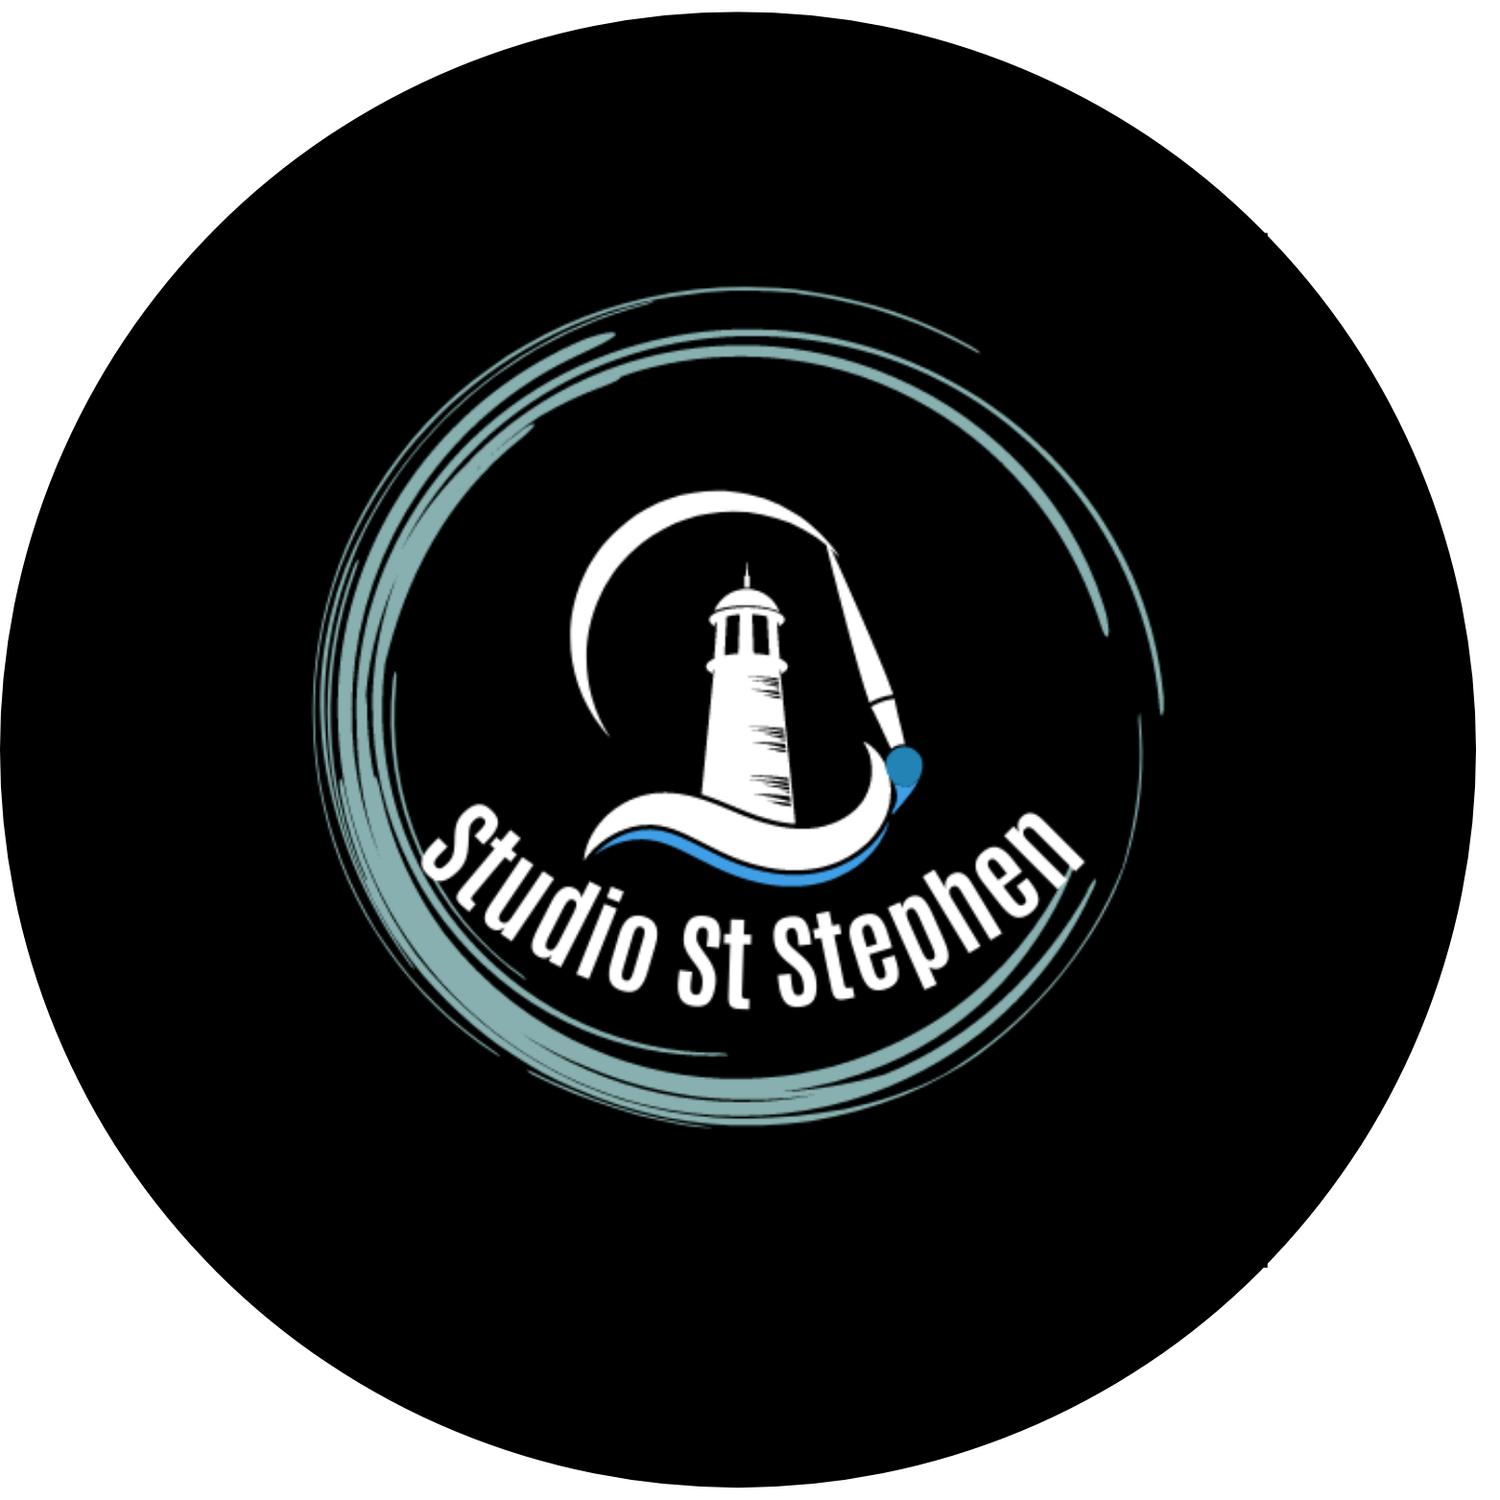 Studio St Stephen